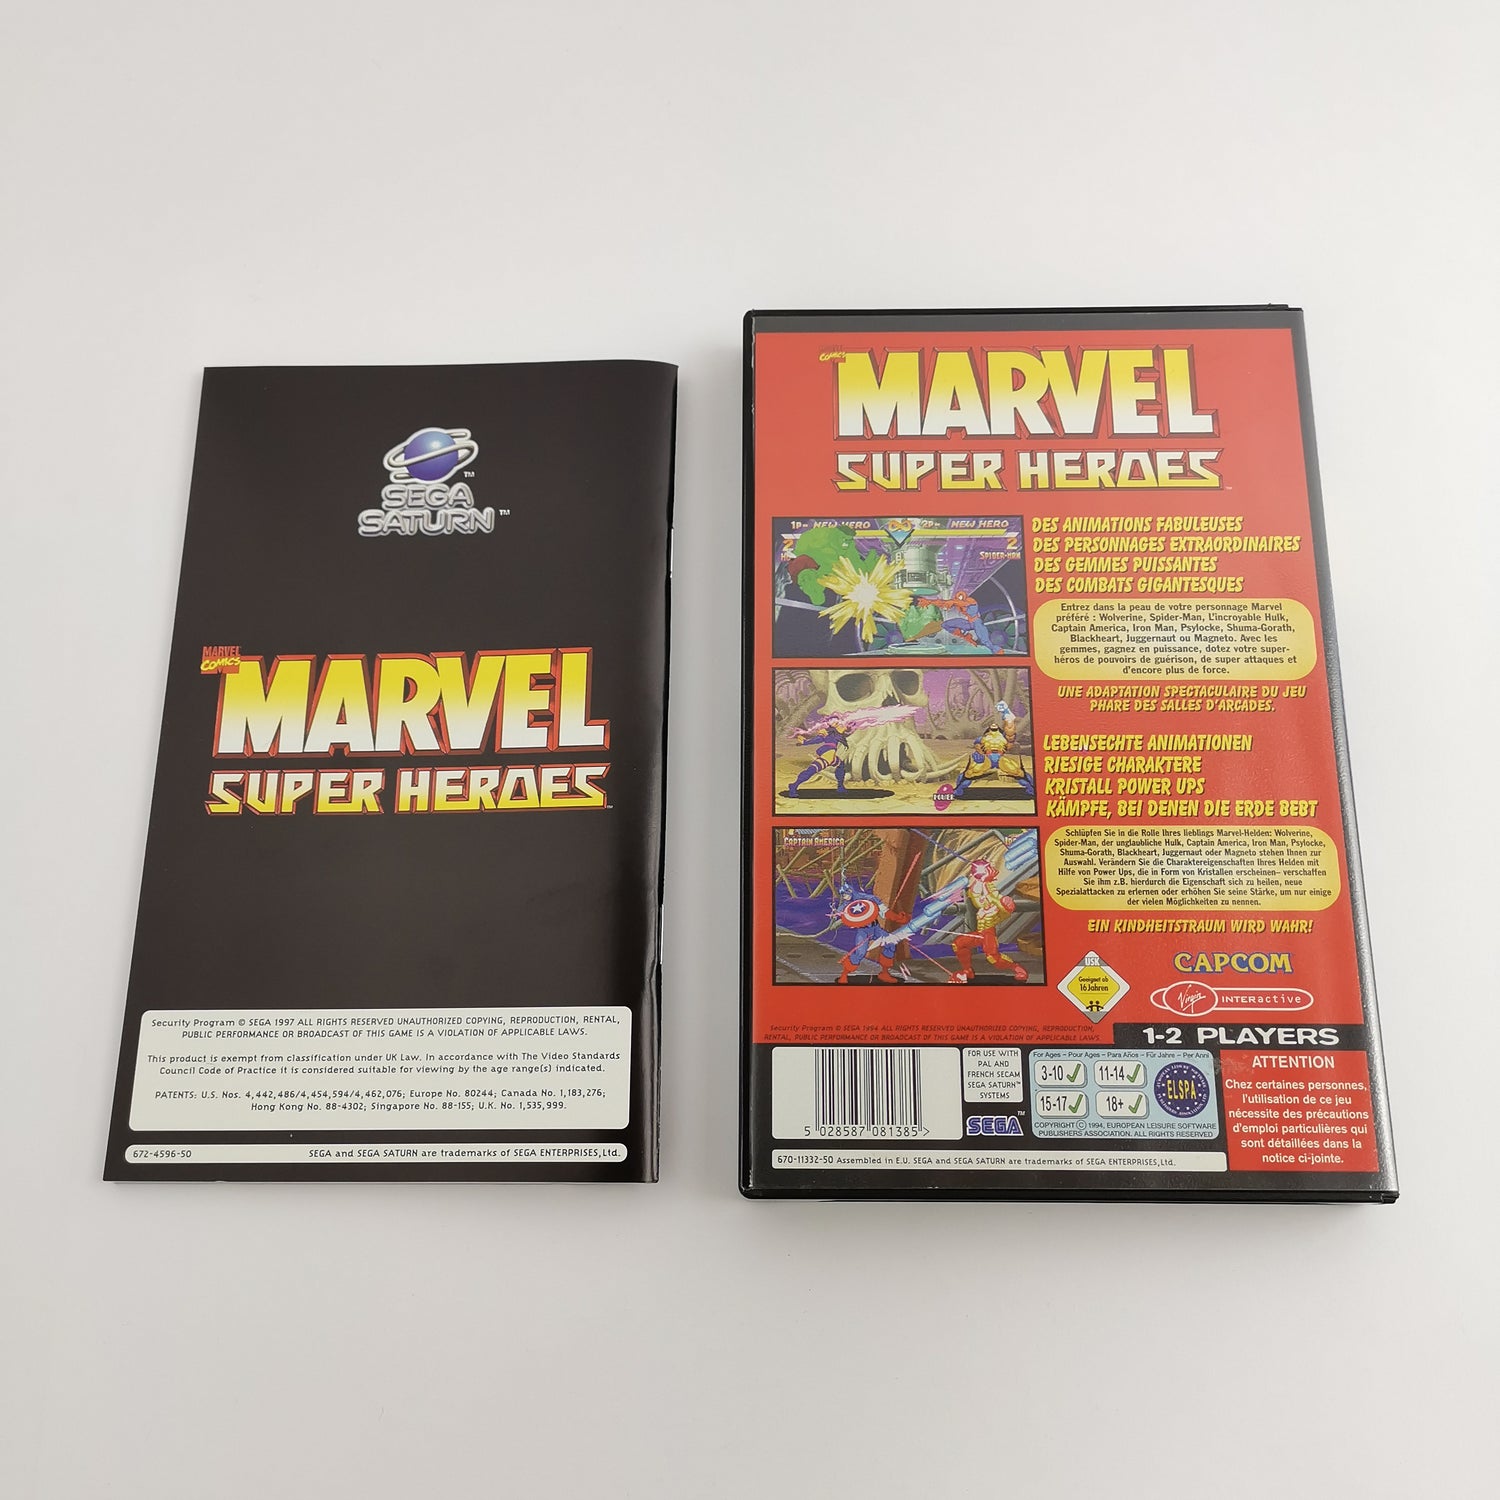 Sega Saturn game: Marvel Super Heroes from Capcom - original packaging & instructions | PAL